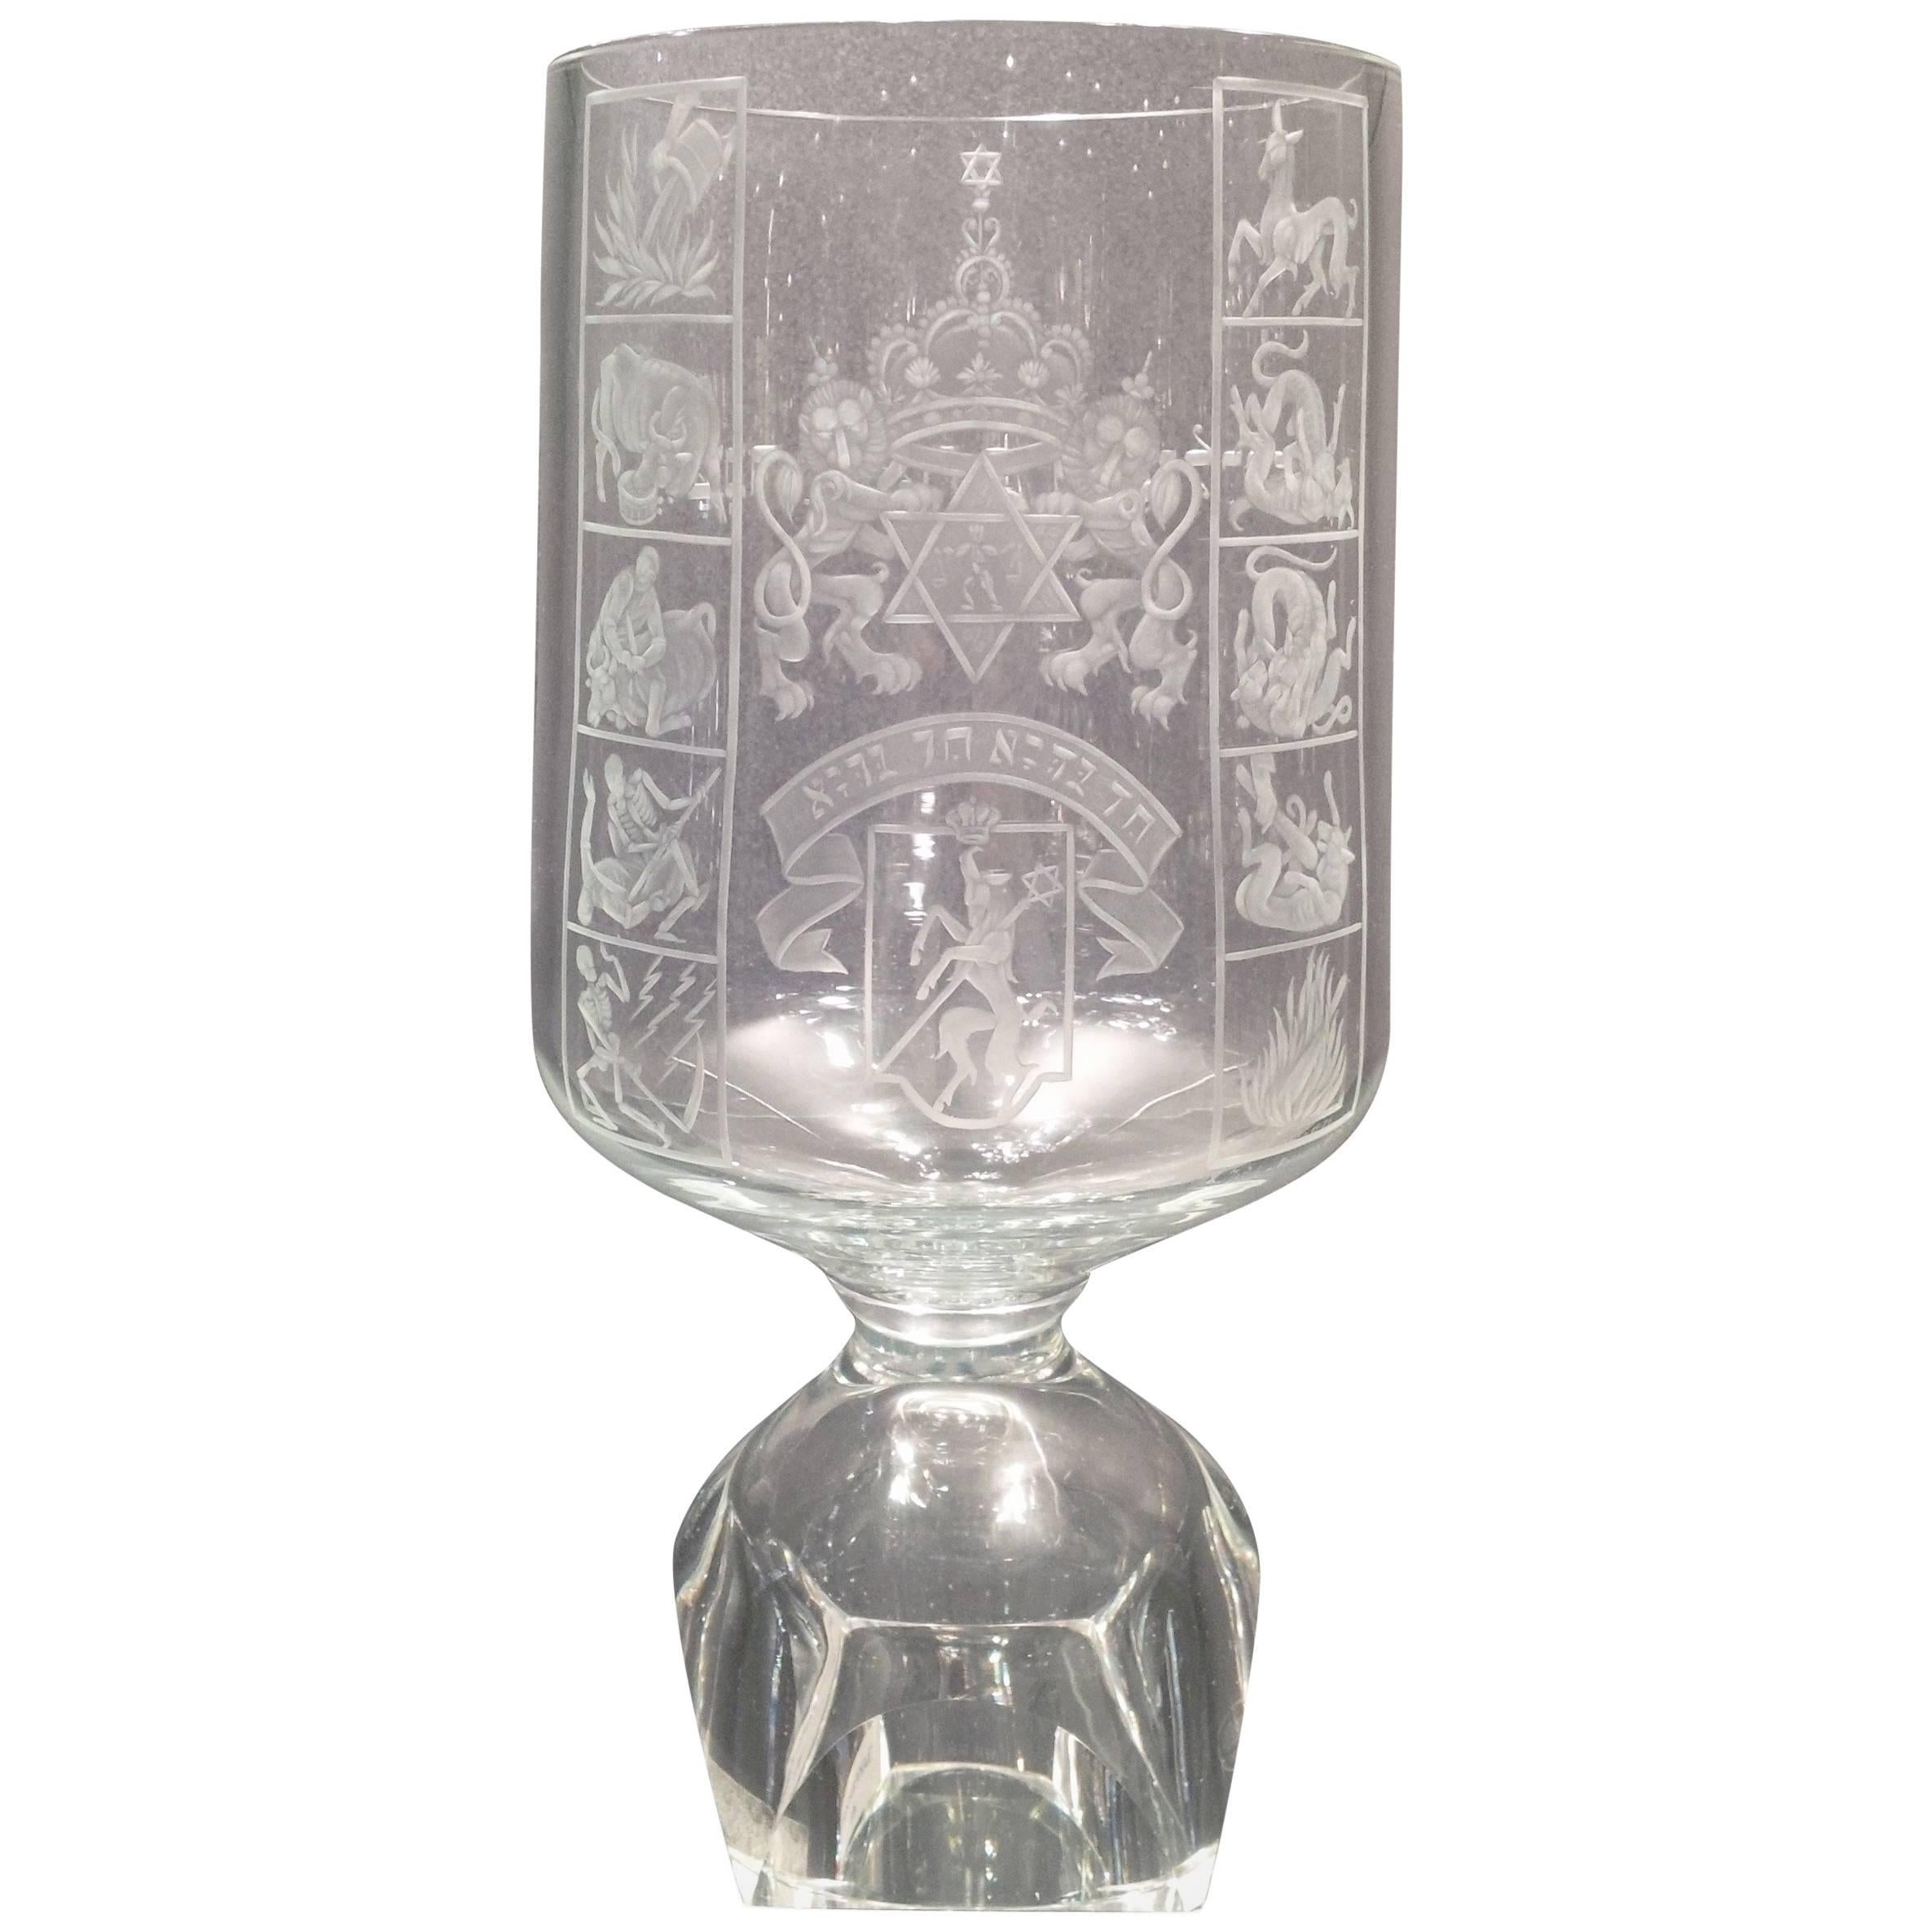 "Elijah's Cup" by Ladislav Jezek, Moser Glassworks For Sale